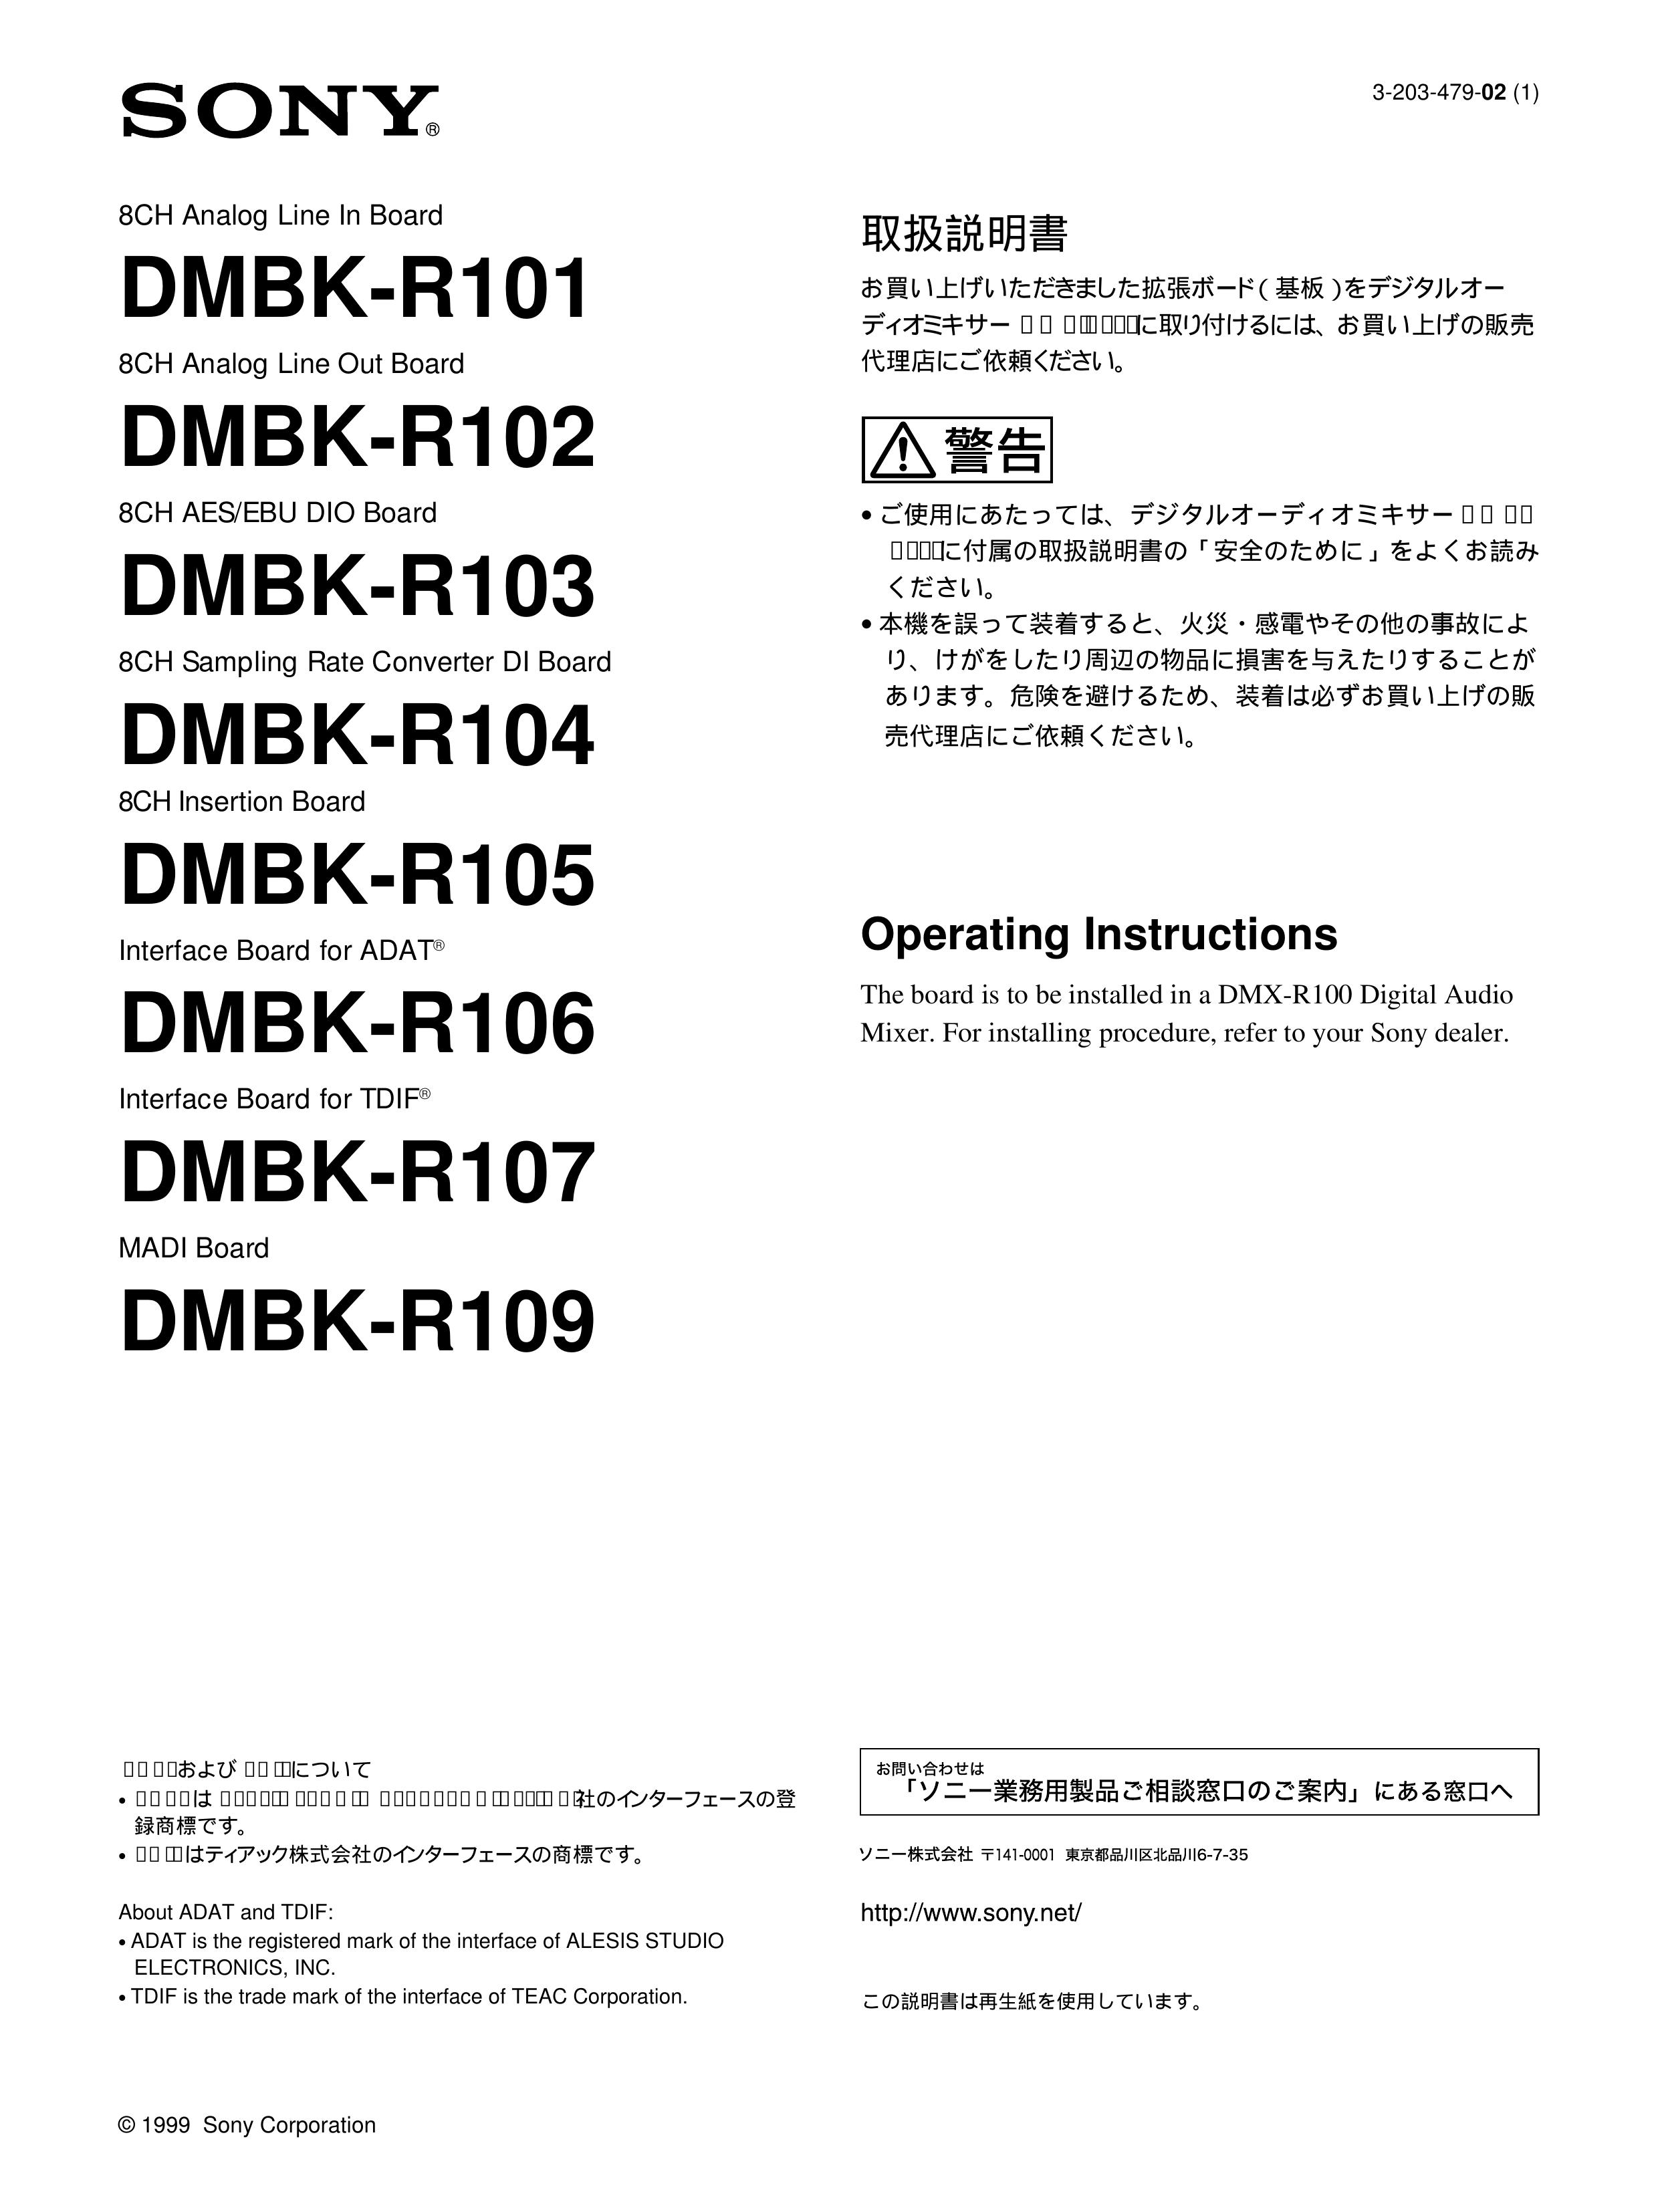 Sony DMBK-R109 Music Mixer User Manual